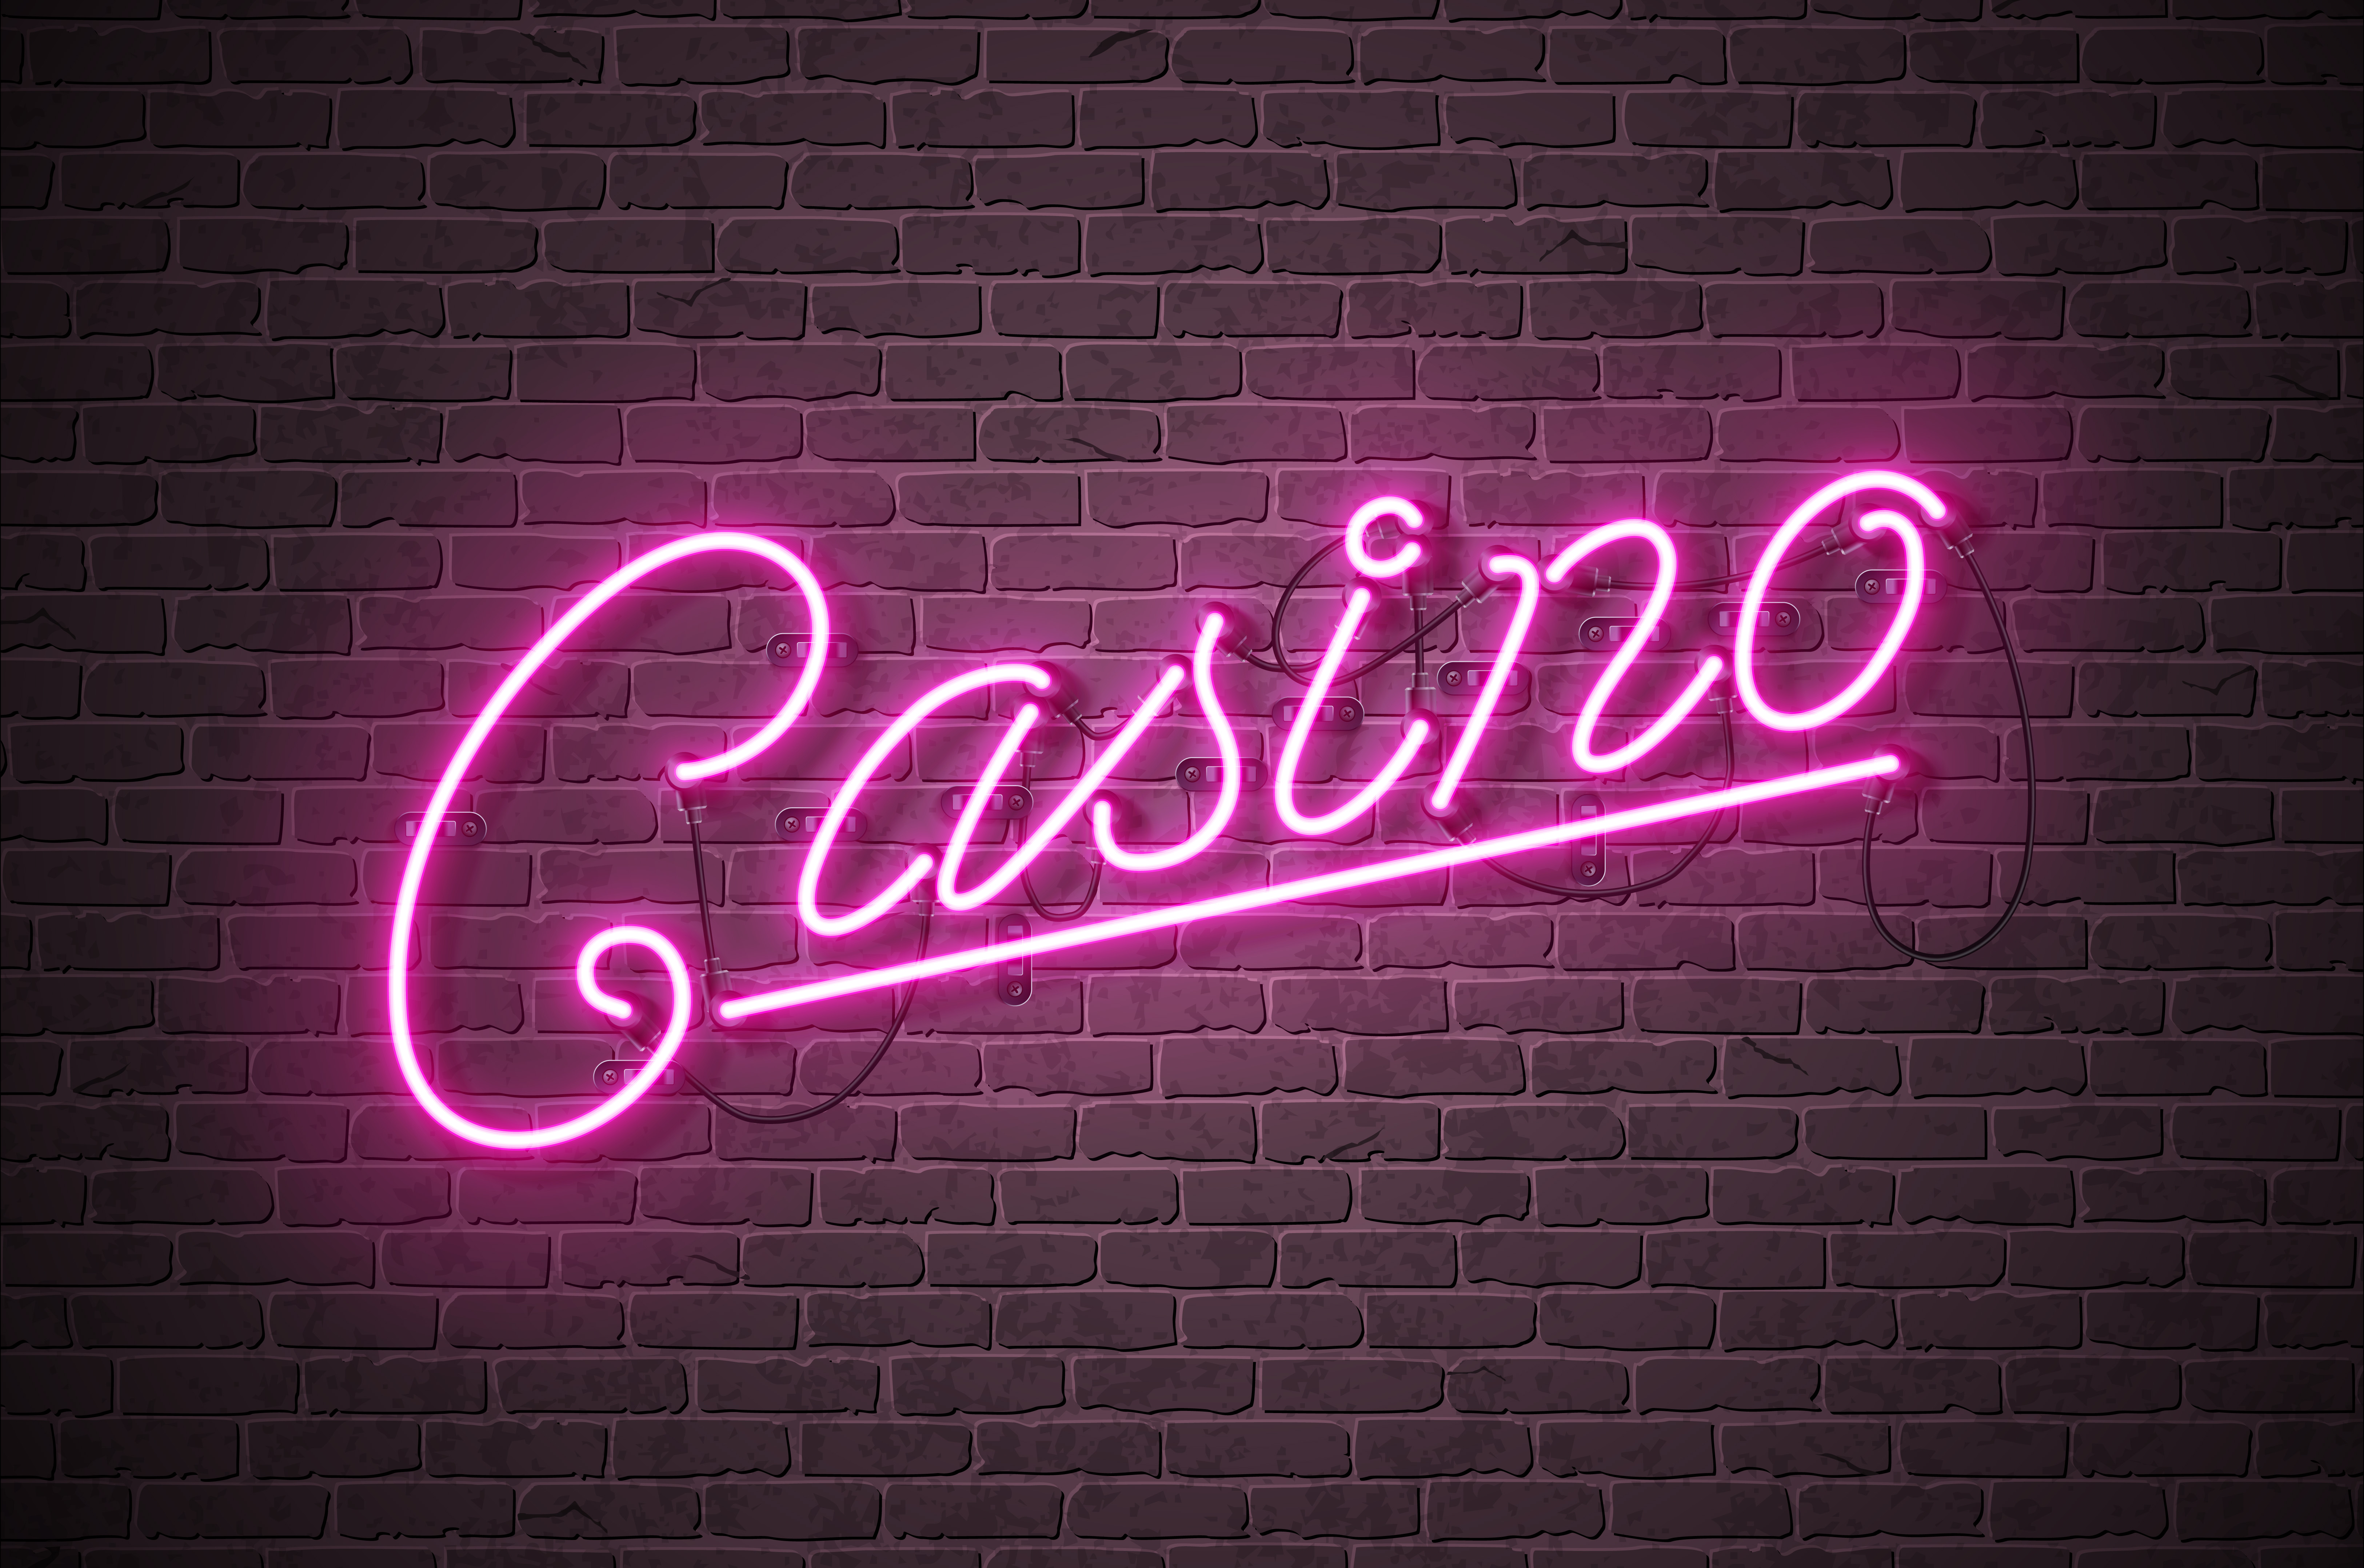 Casino neon sign illustration on brick wall background. Vector light